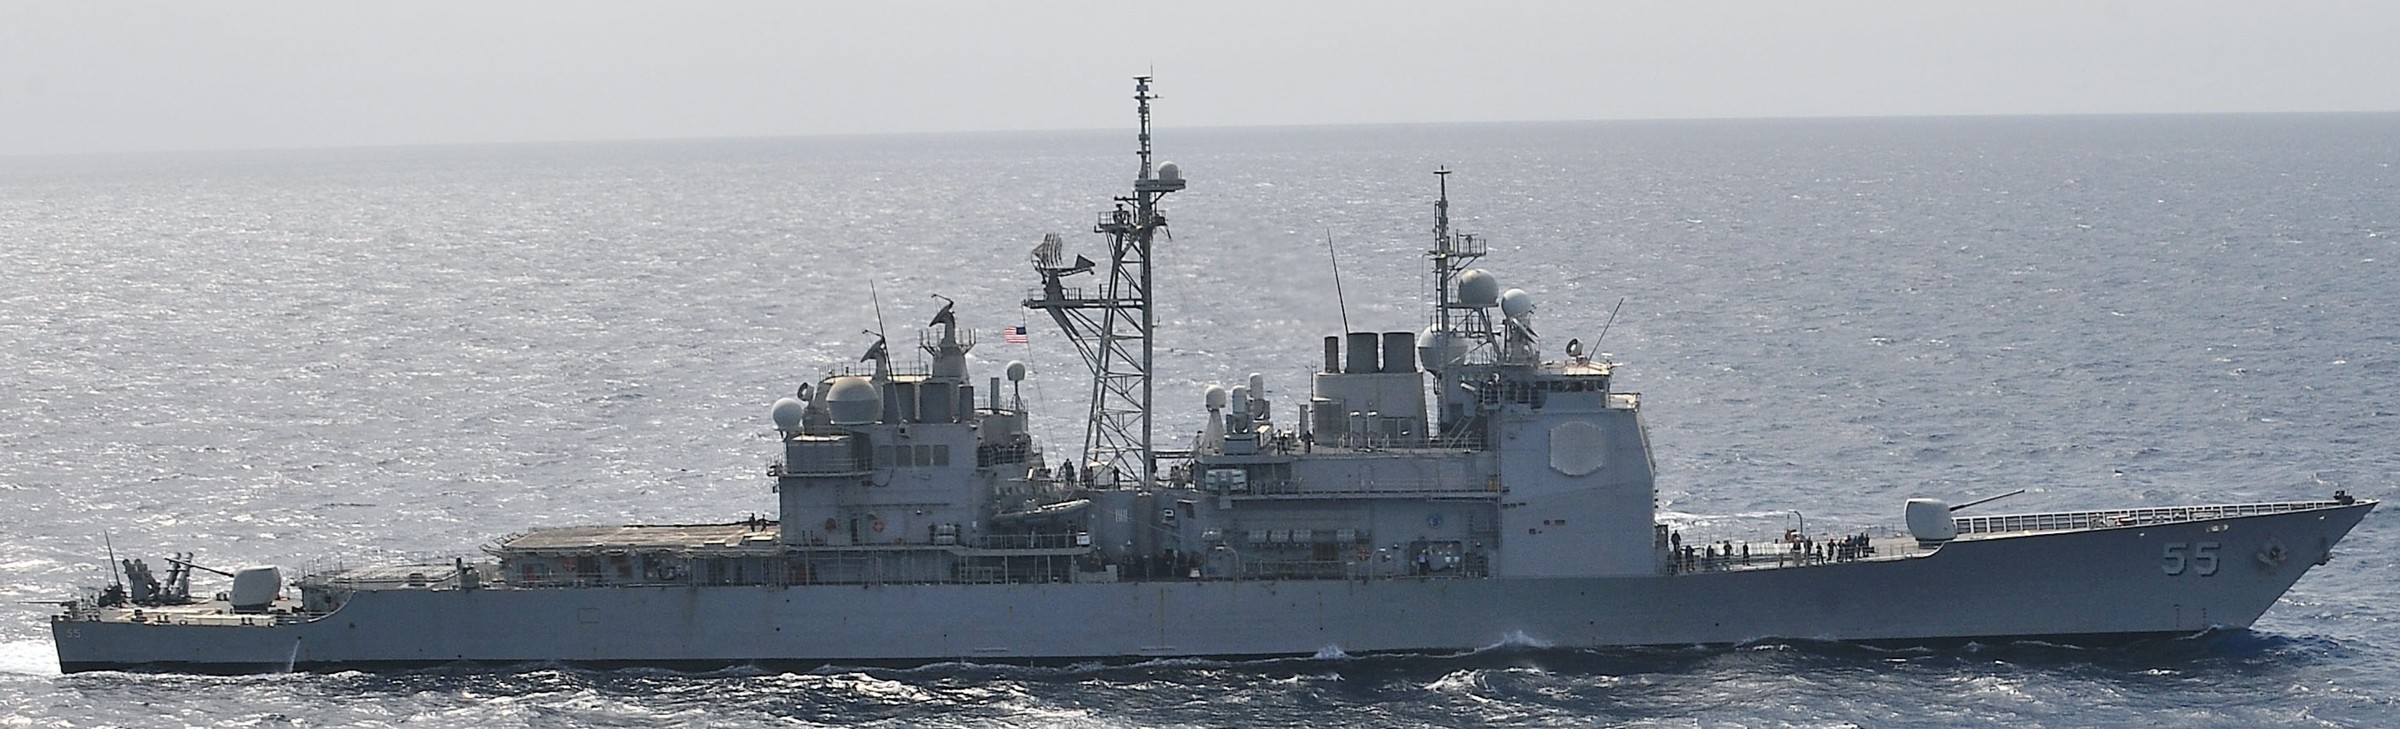 cg-55 uss leyte gulf ticonderoga class guided missile cruiser aegis us navy red sea 36